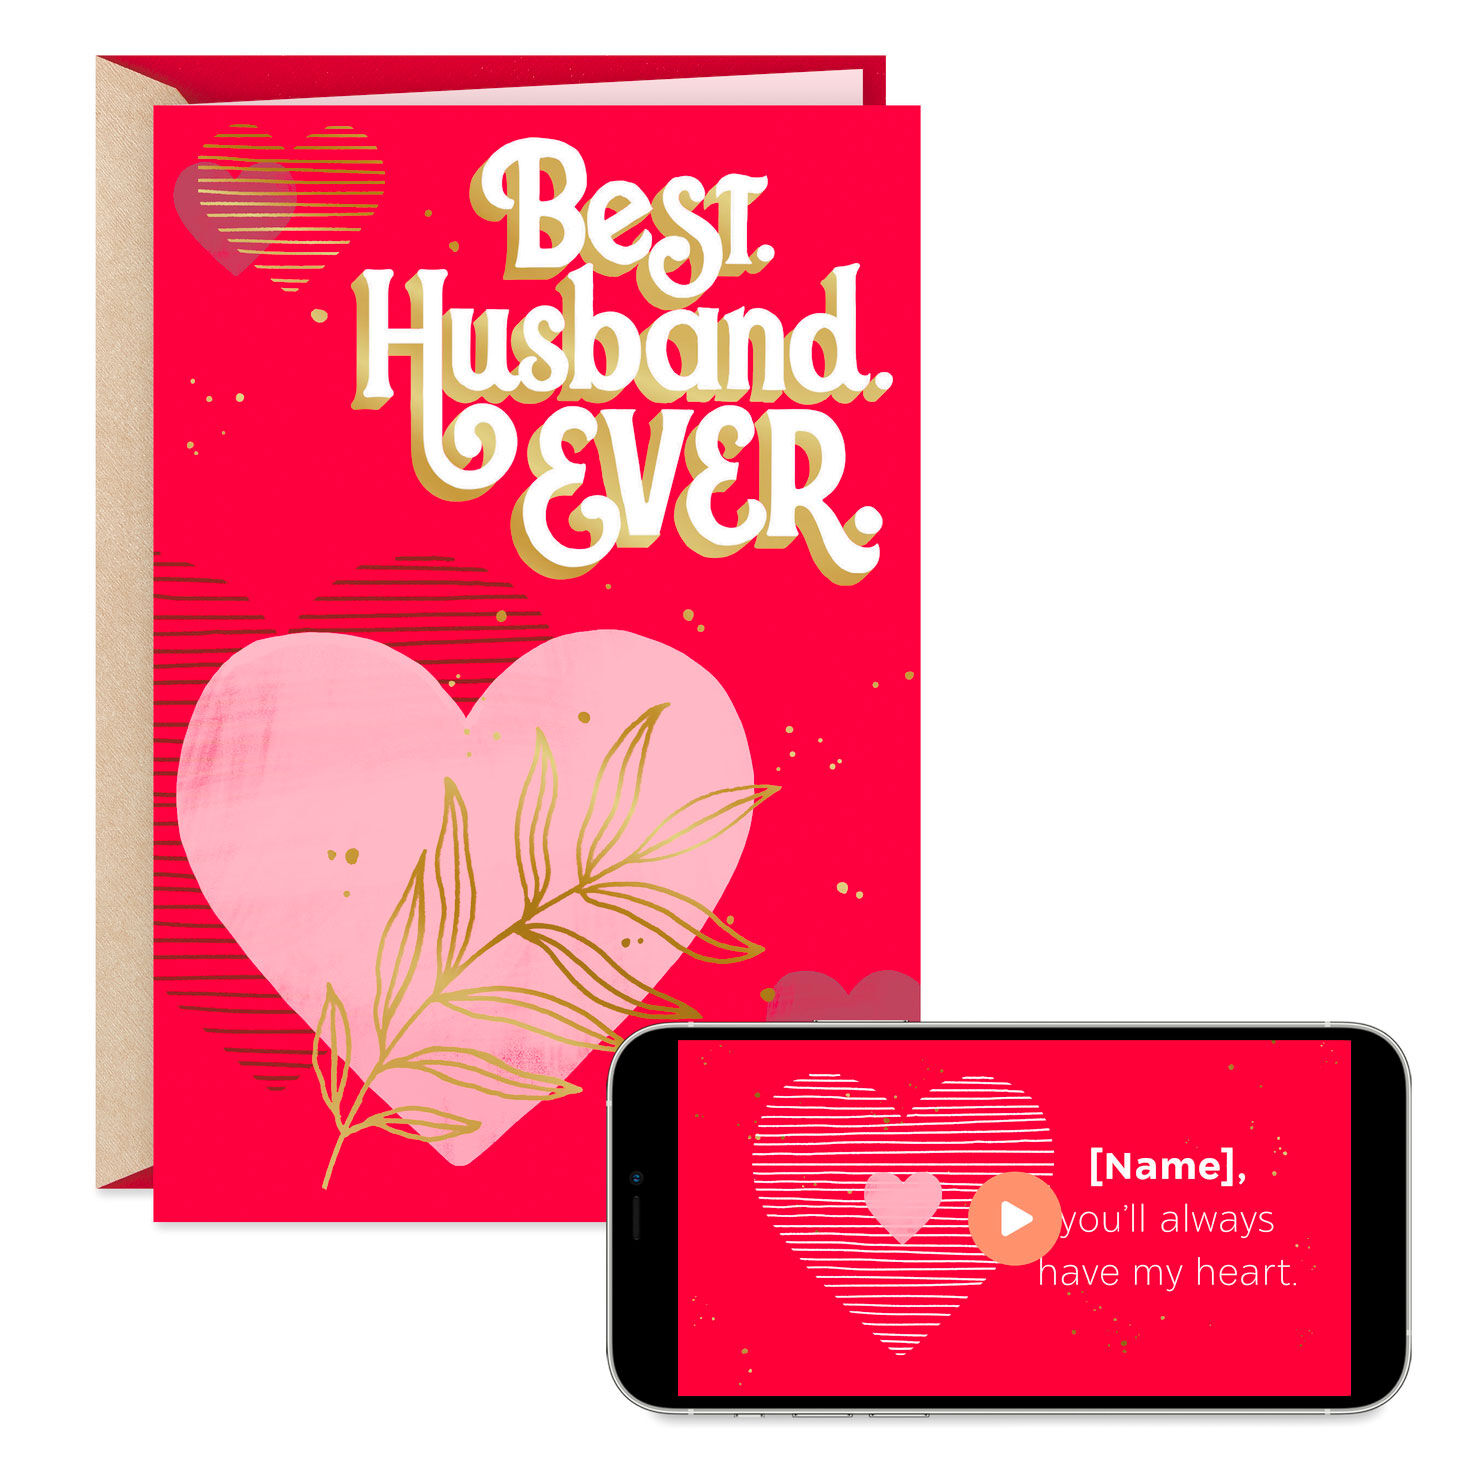 Husband Love You X5 Valentines Day Corgi Dog Greeting Card Hallmark 